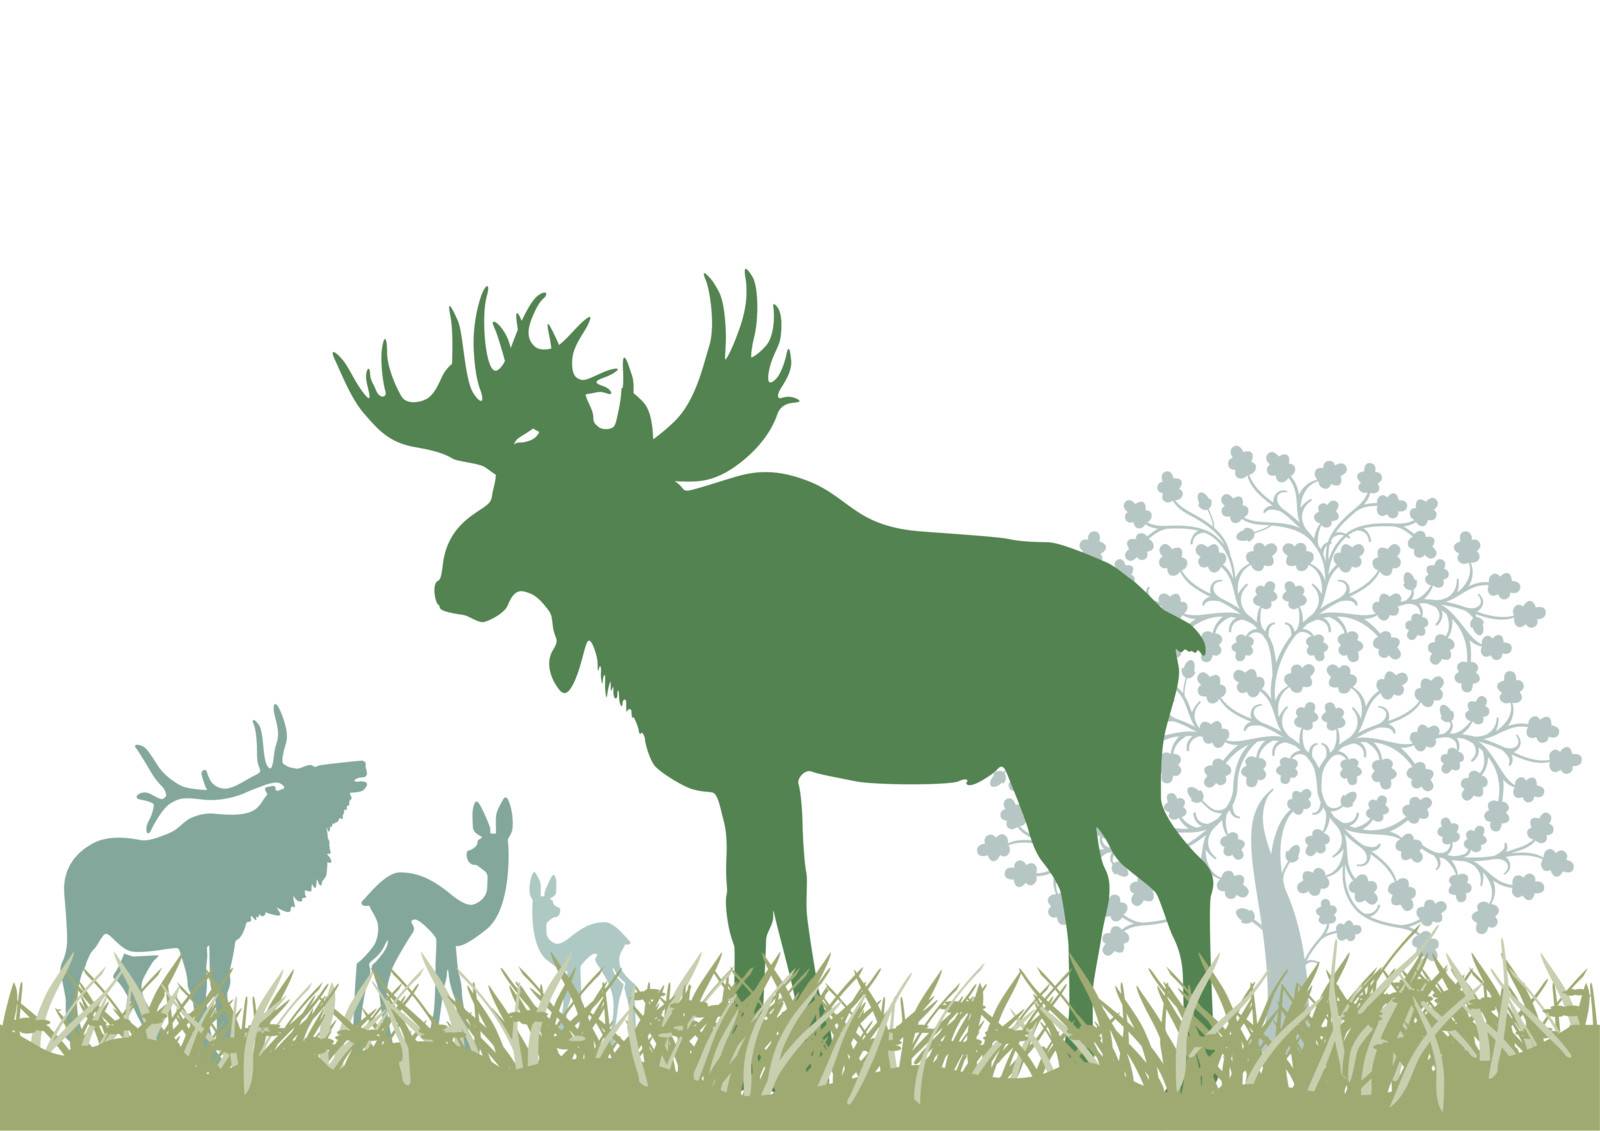 Elk and wild animals